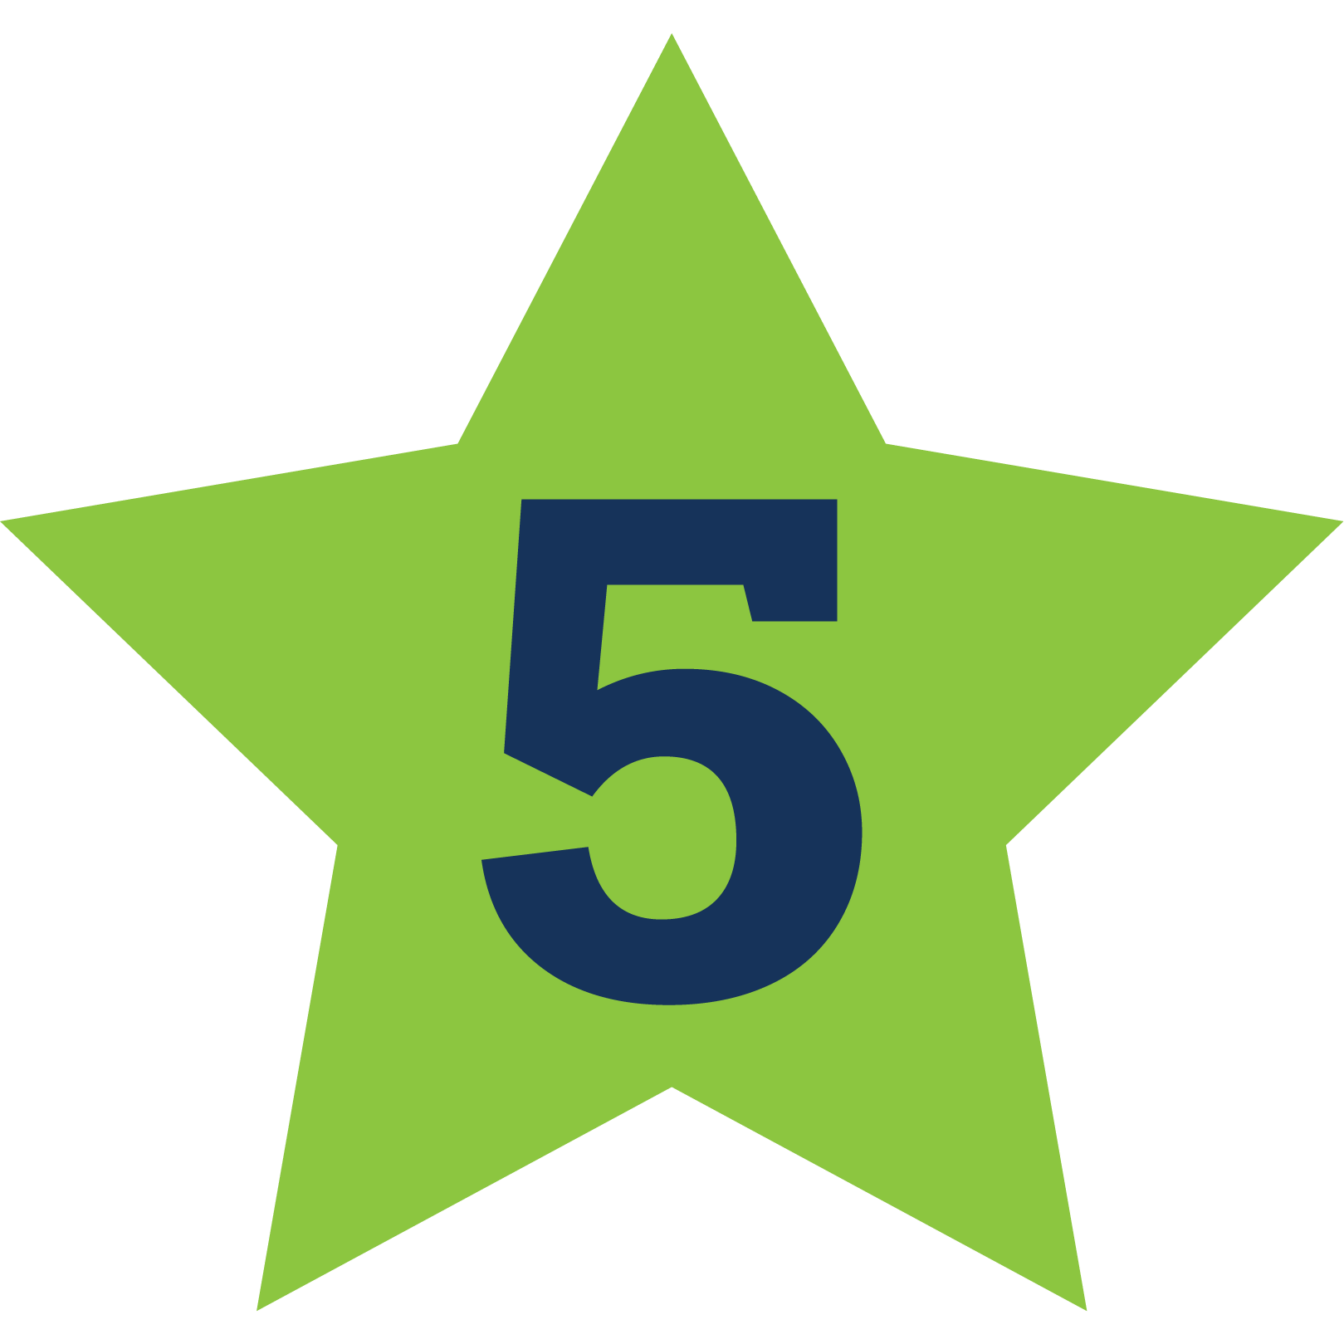 Five written on green star